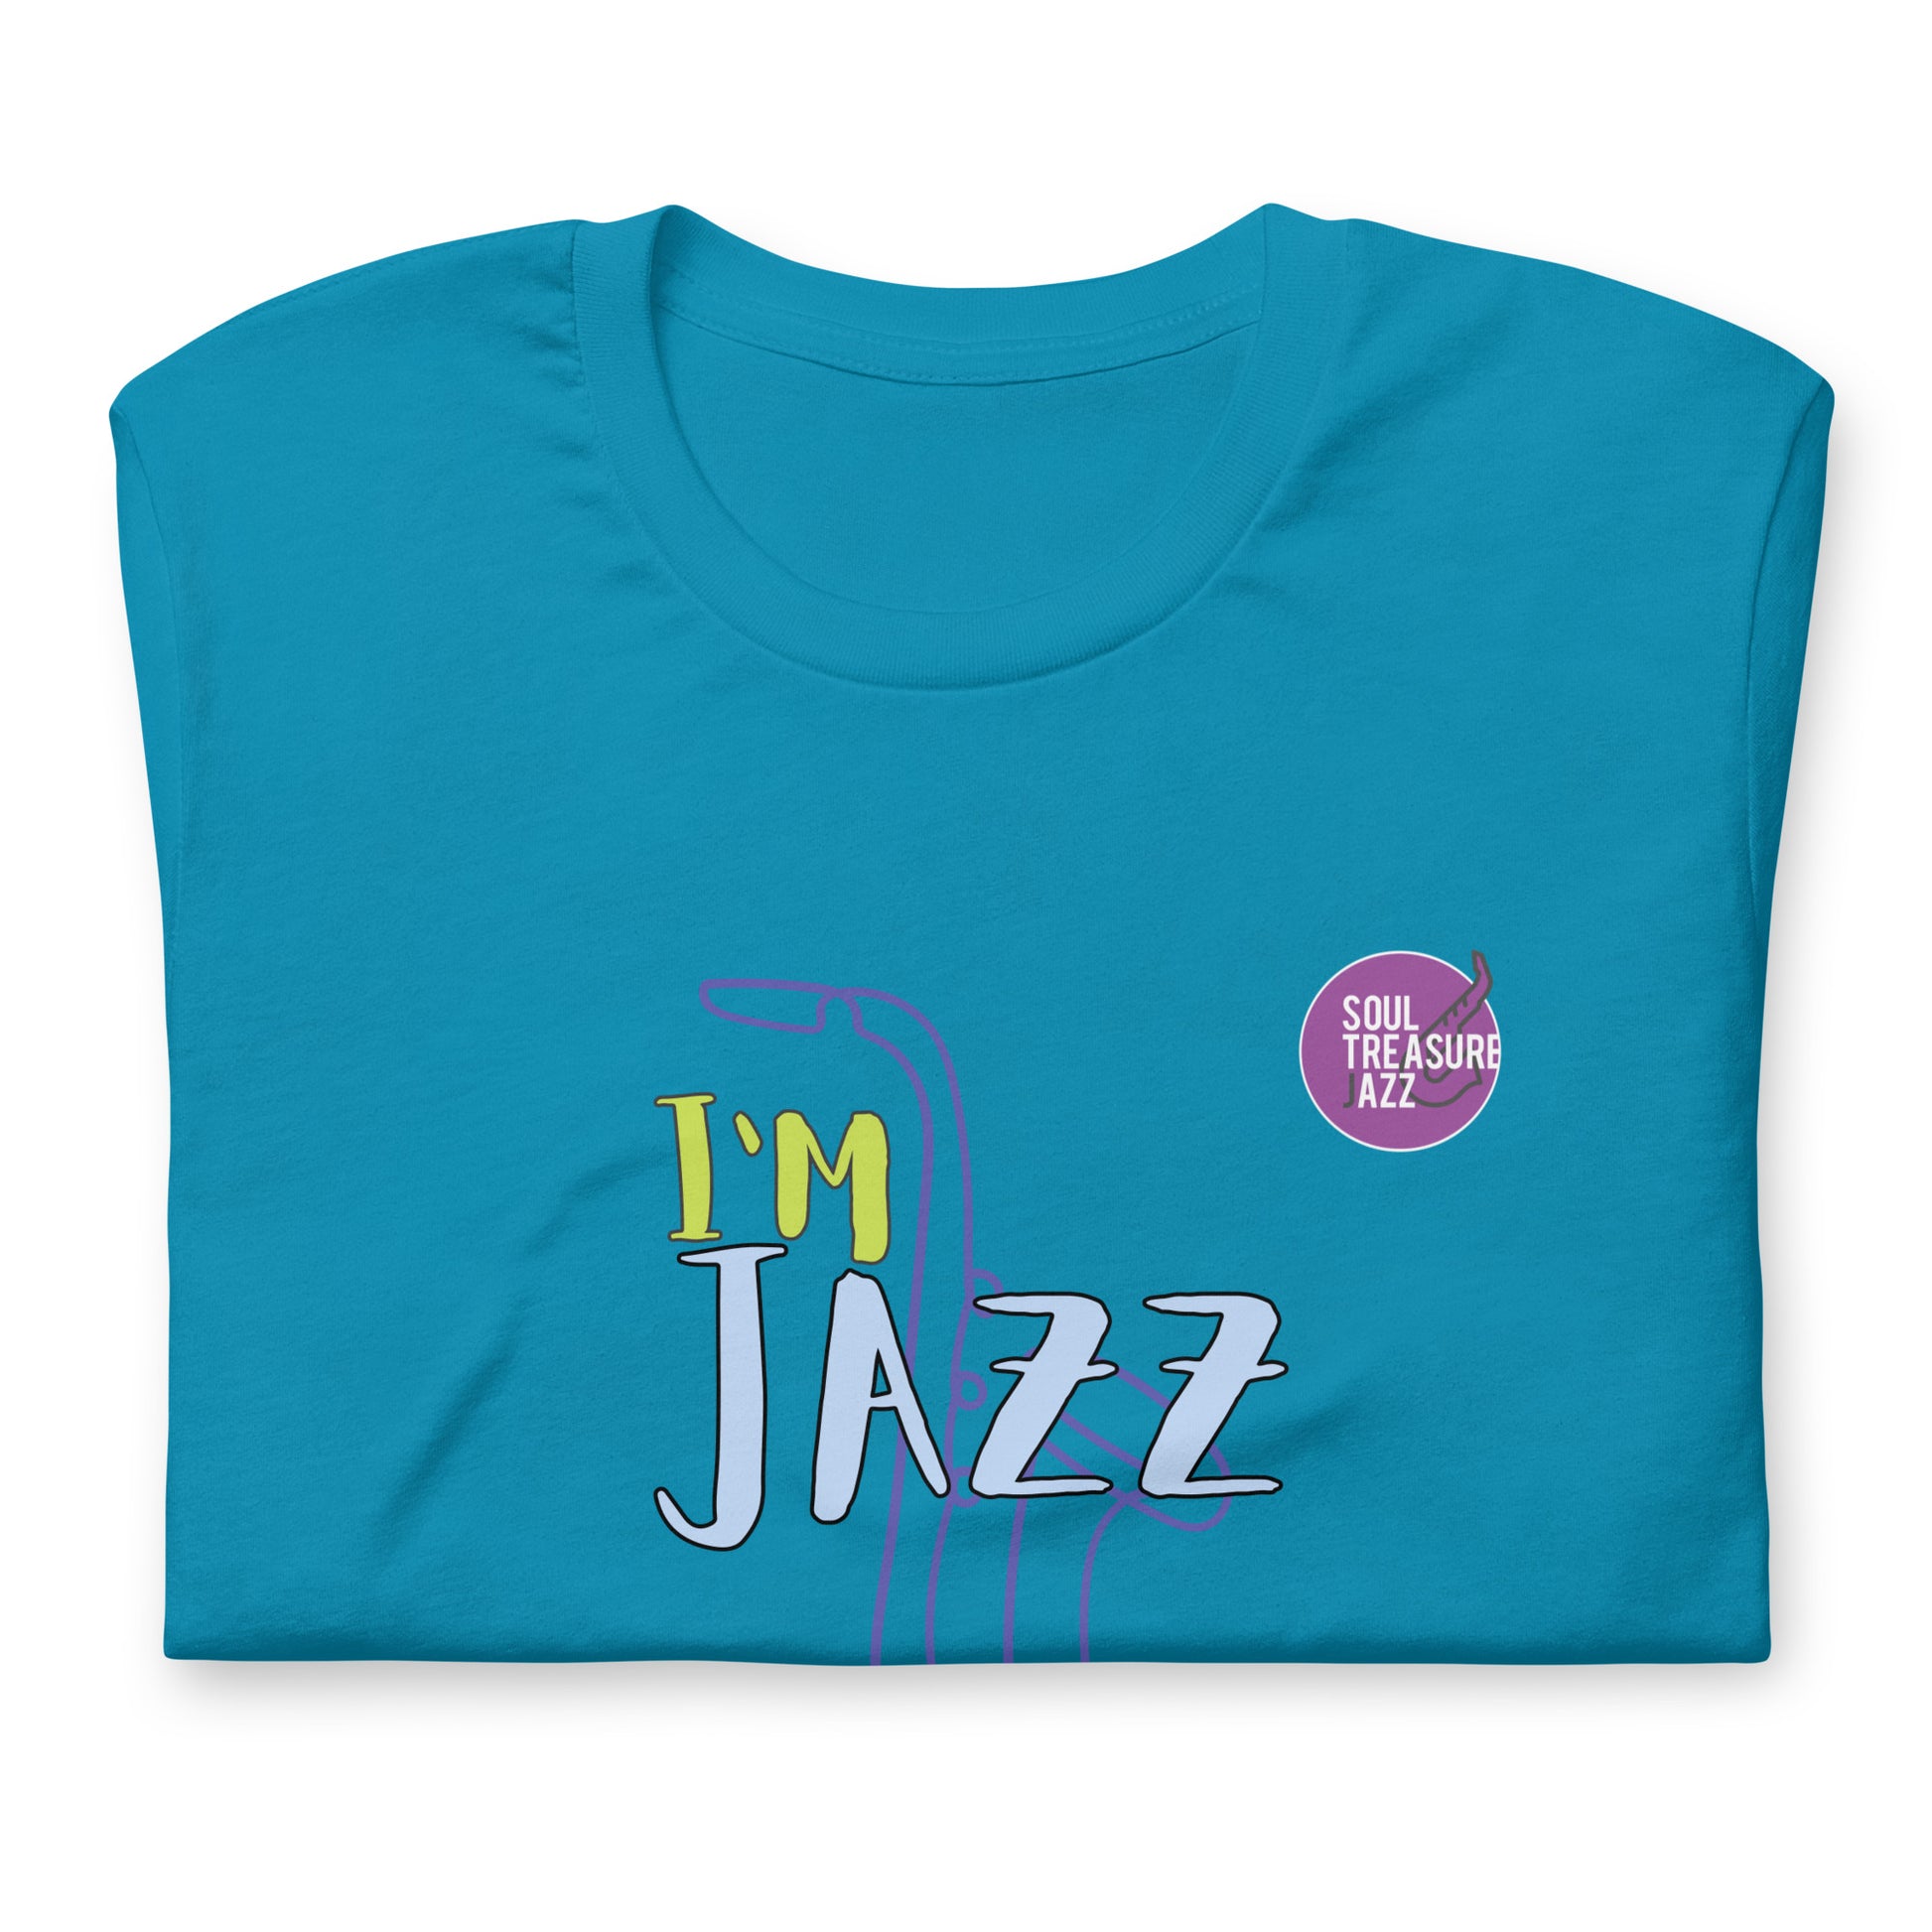 Official Jazz Apparel